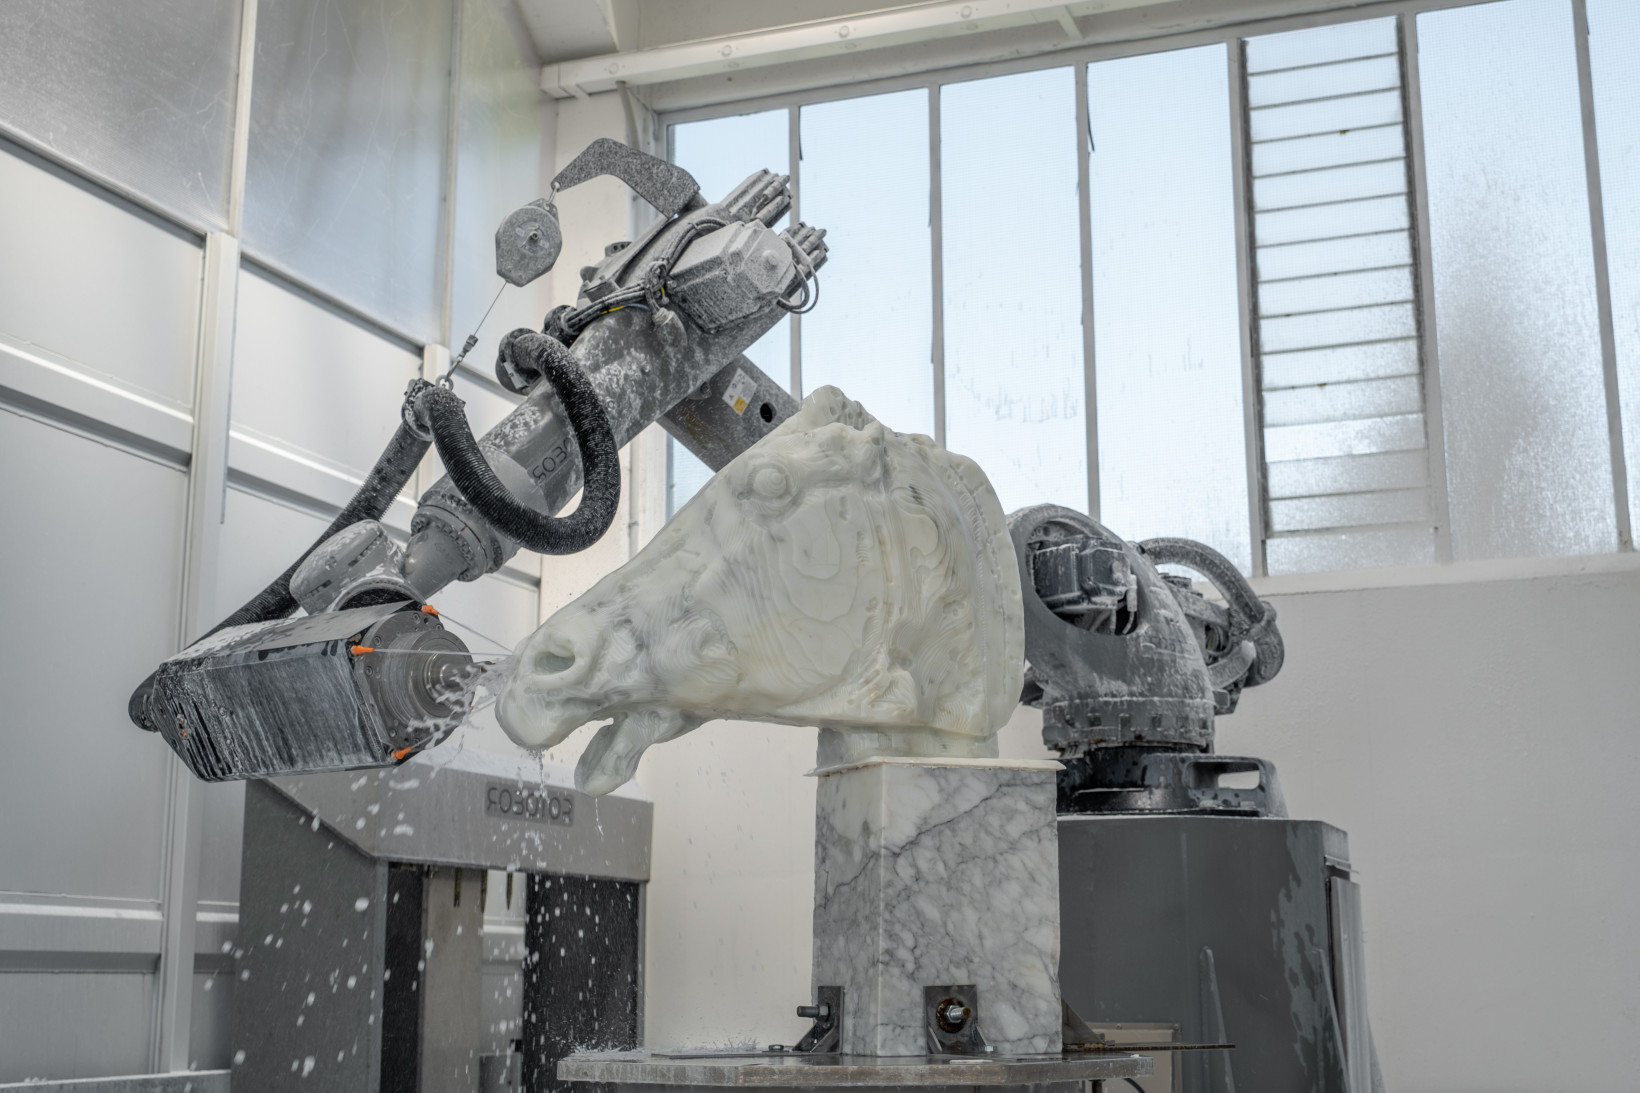 robots create sculptures horse of parthenon